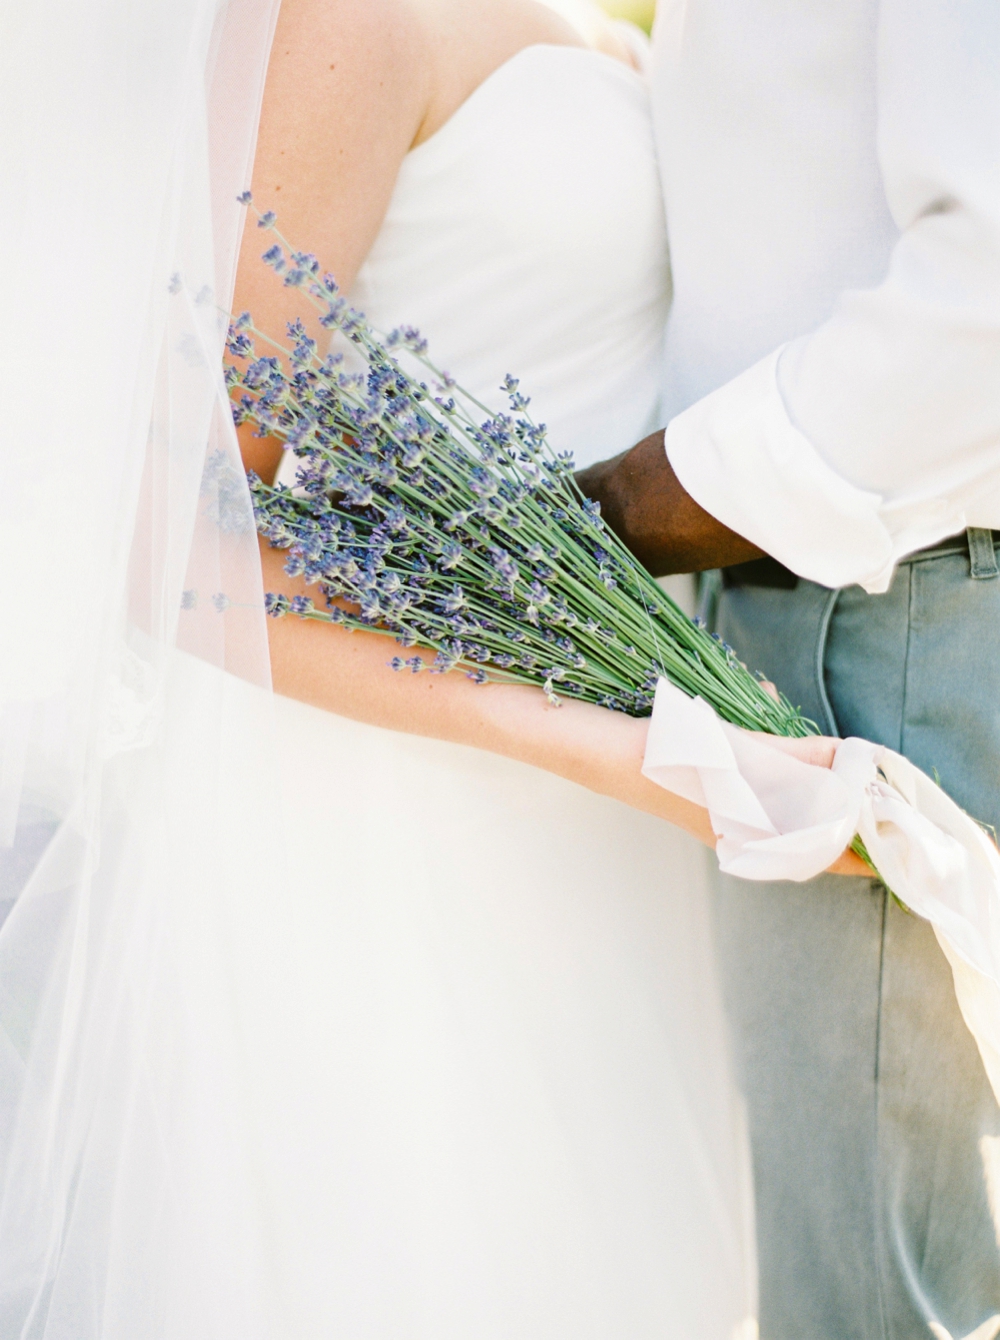 Lavender Fields | Kelowna Wedding and elopement photographer | Justine Milton Photography